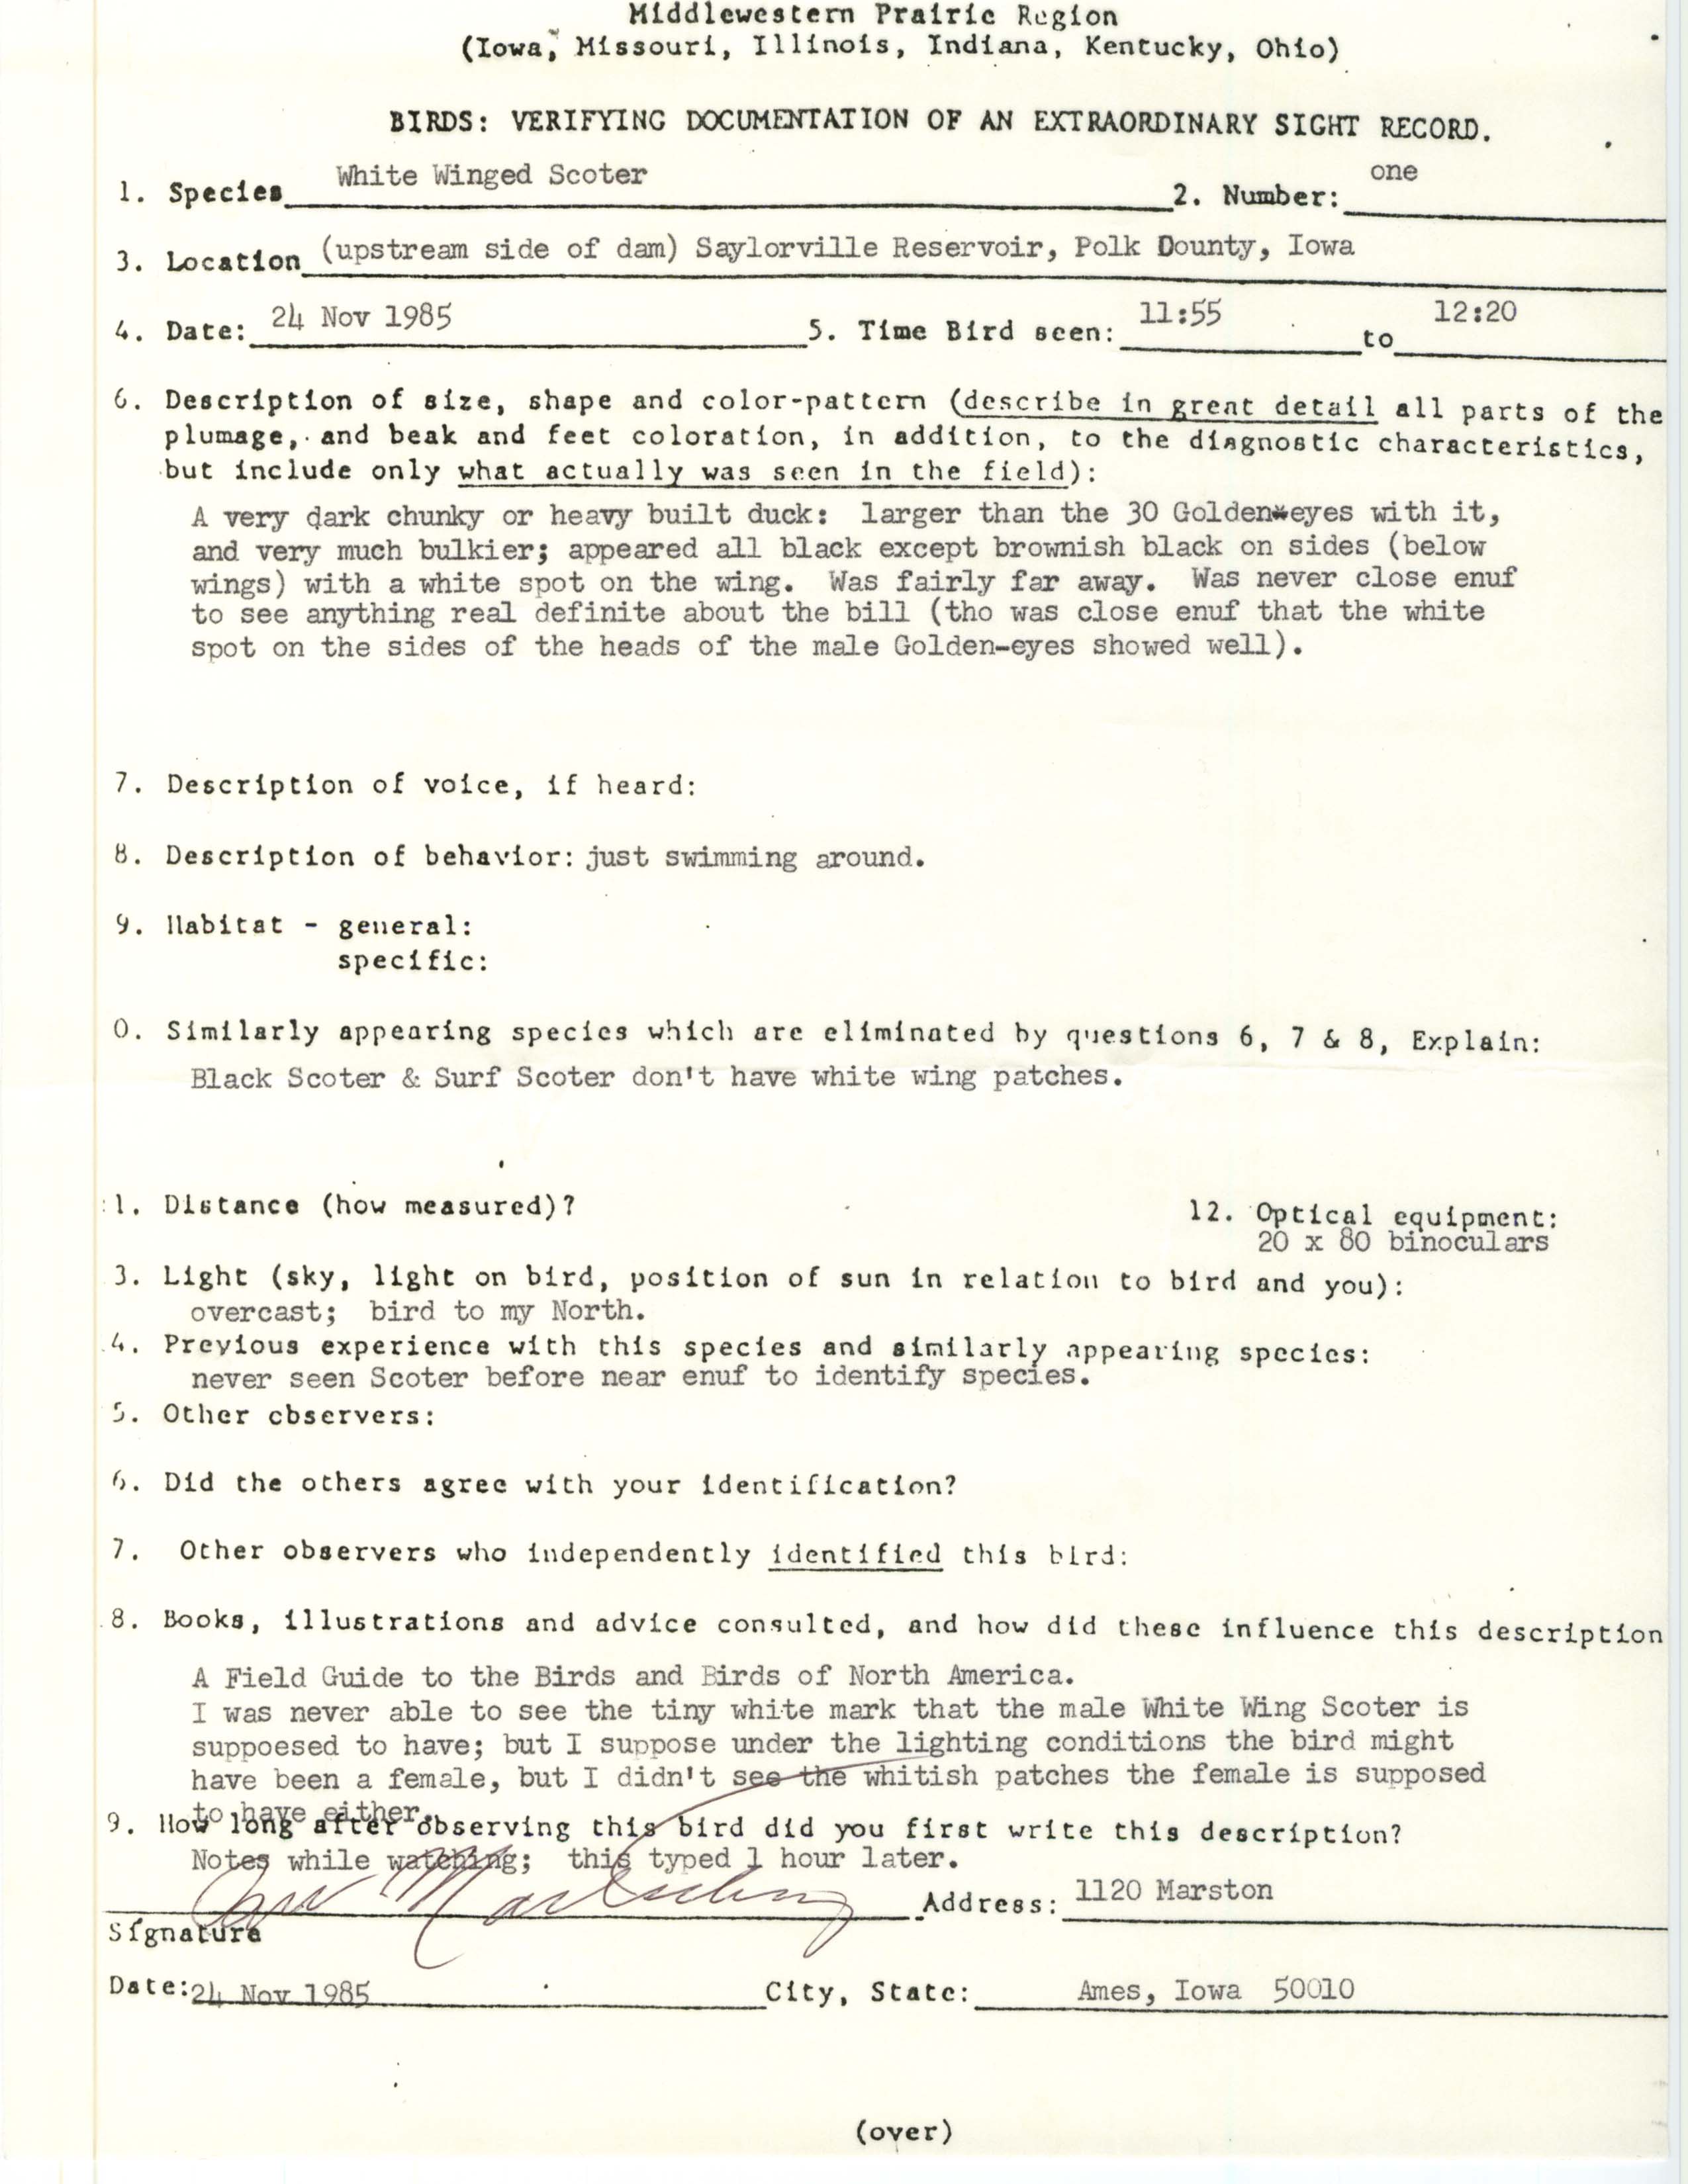 Rare bird documentation form for White-winged Scoter at Saylorville Reservoir, 1985